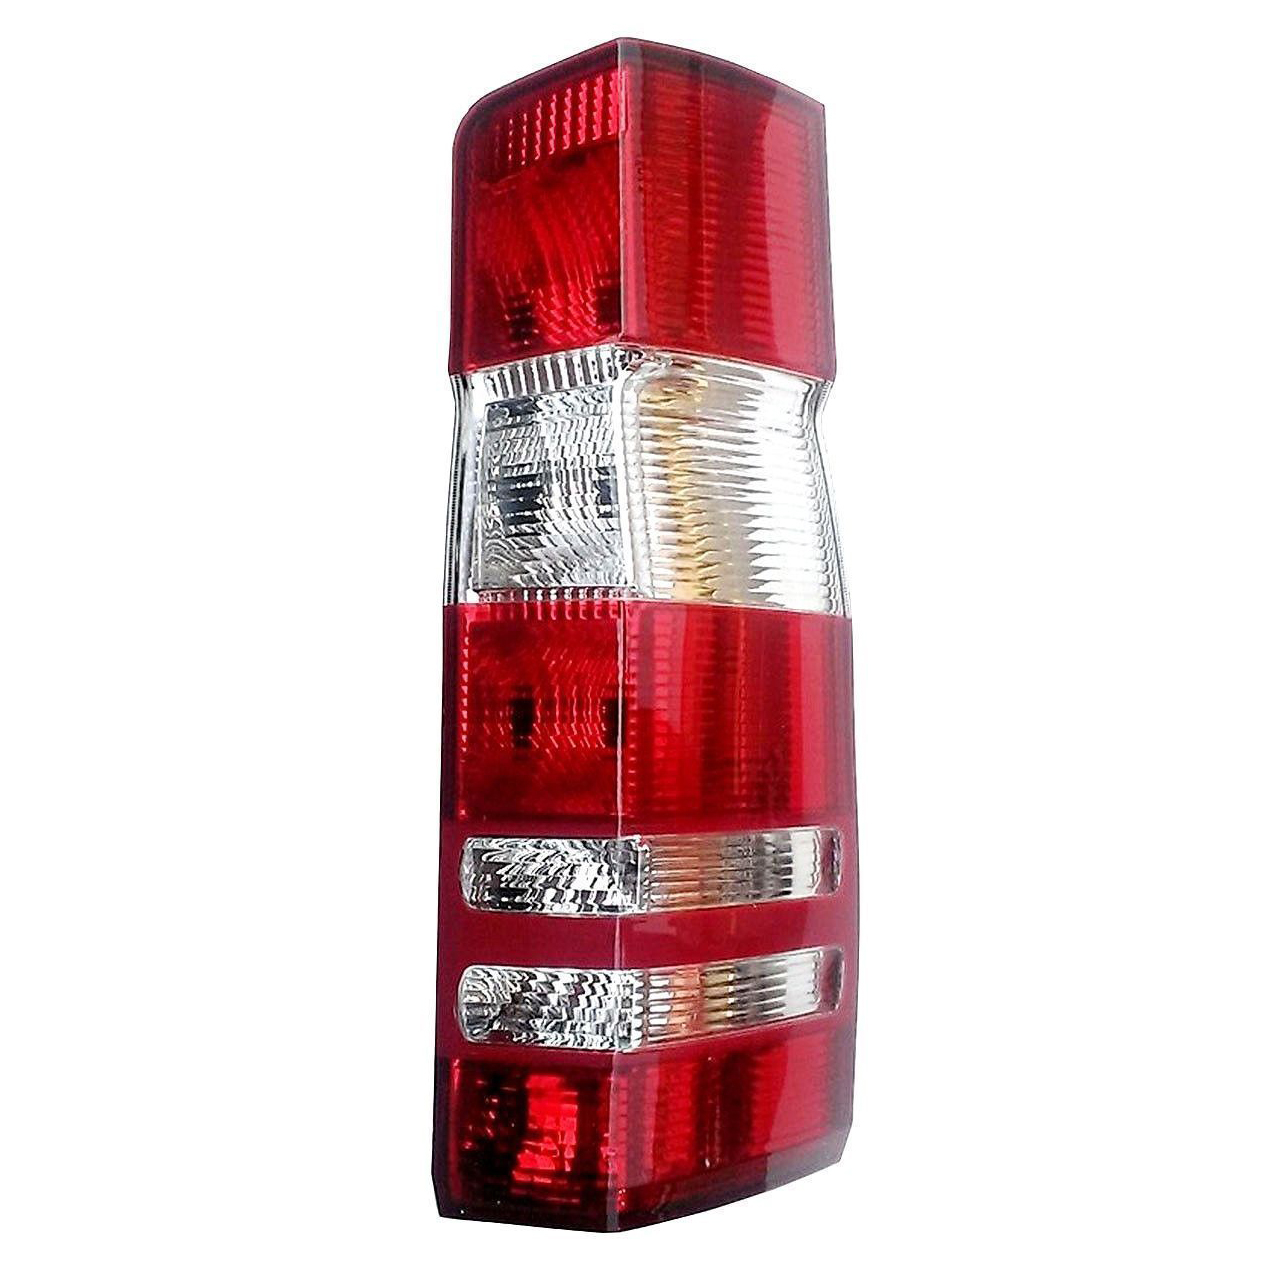 Mercedes Sprinter VAN REAR LAMP LIGHT RIGHT HAND ( UK Driver Side ) 2012 to 2018 – REAR LAMP LIGHT